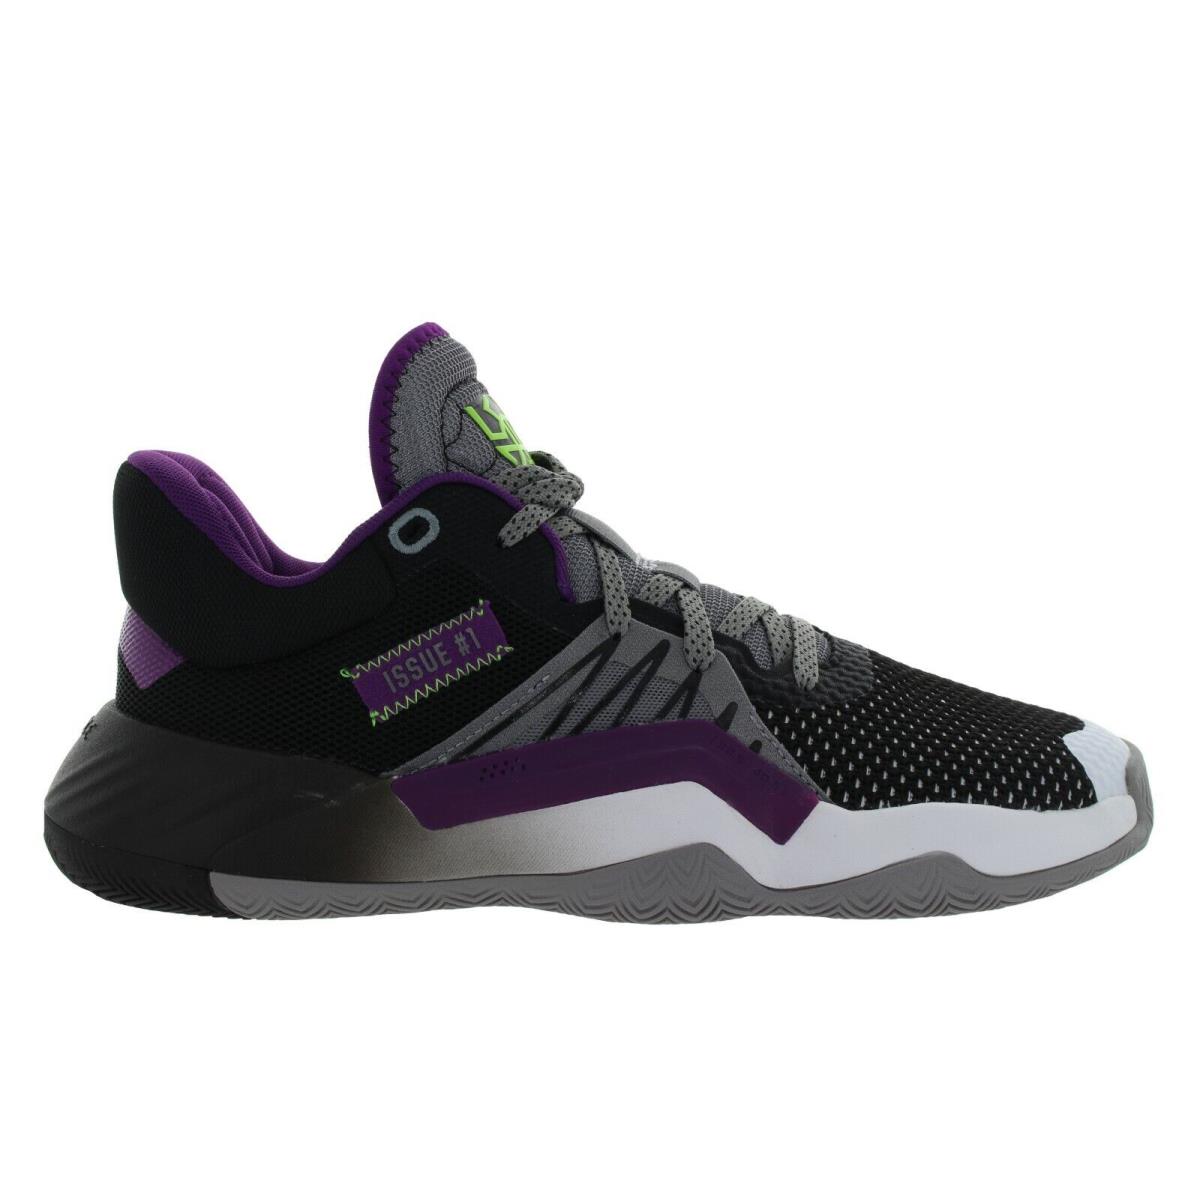 Adidas Mens Donovan Mitchell D.o.n. Issue 1 Purple Basketball Shoes Size 7 - Grey Three, Core Black, Glory Purple